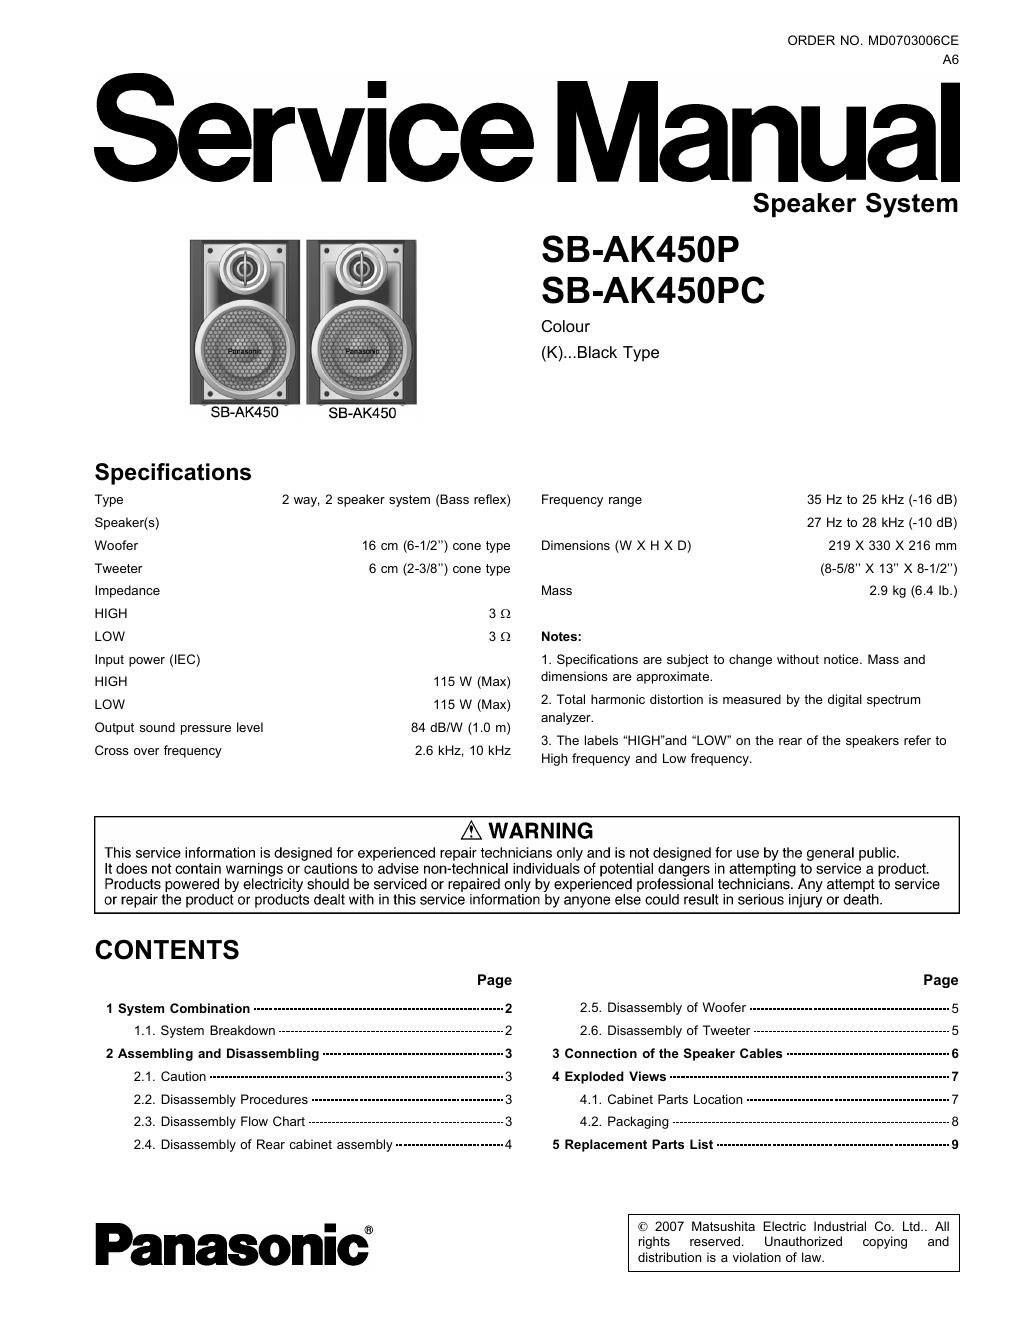 panasonic sb ak 450 p service manual